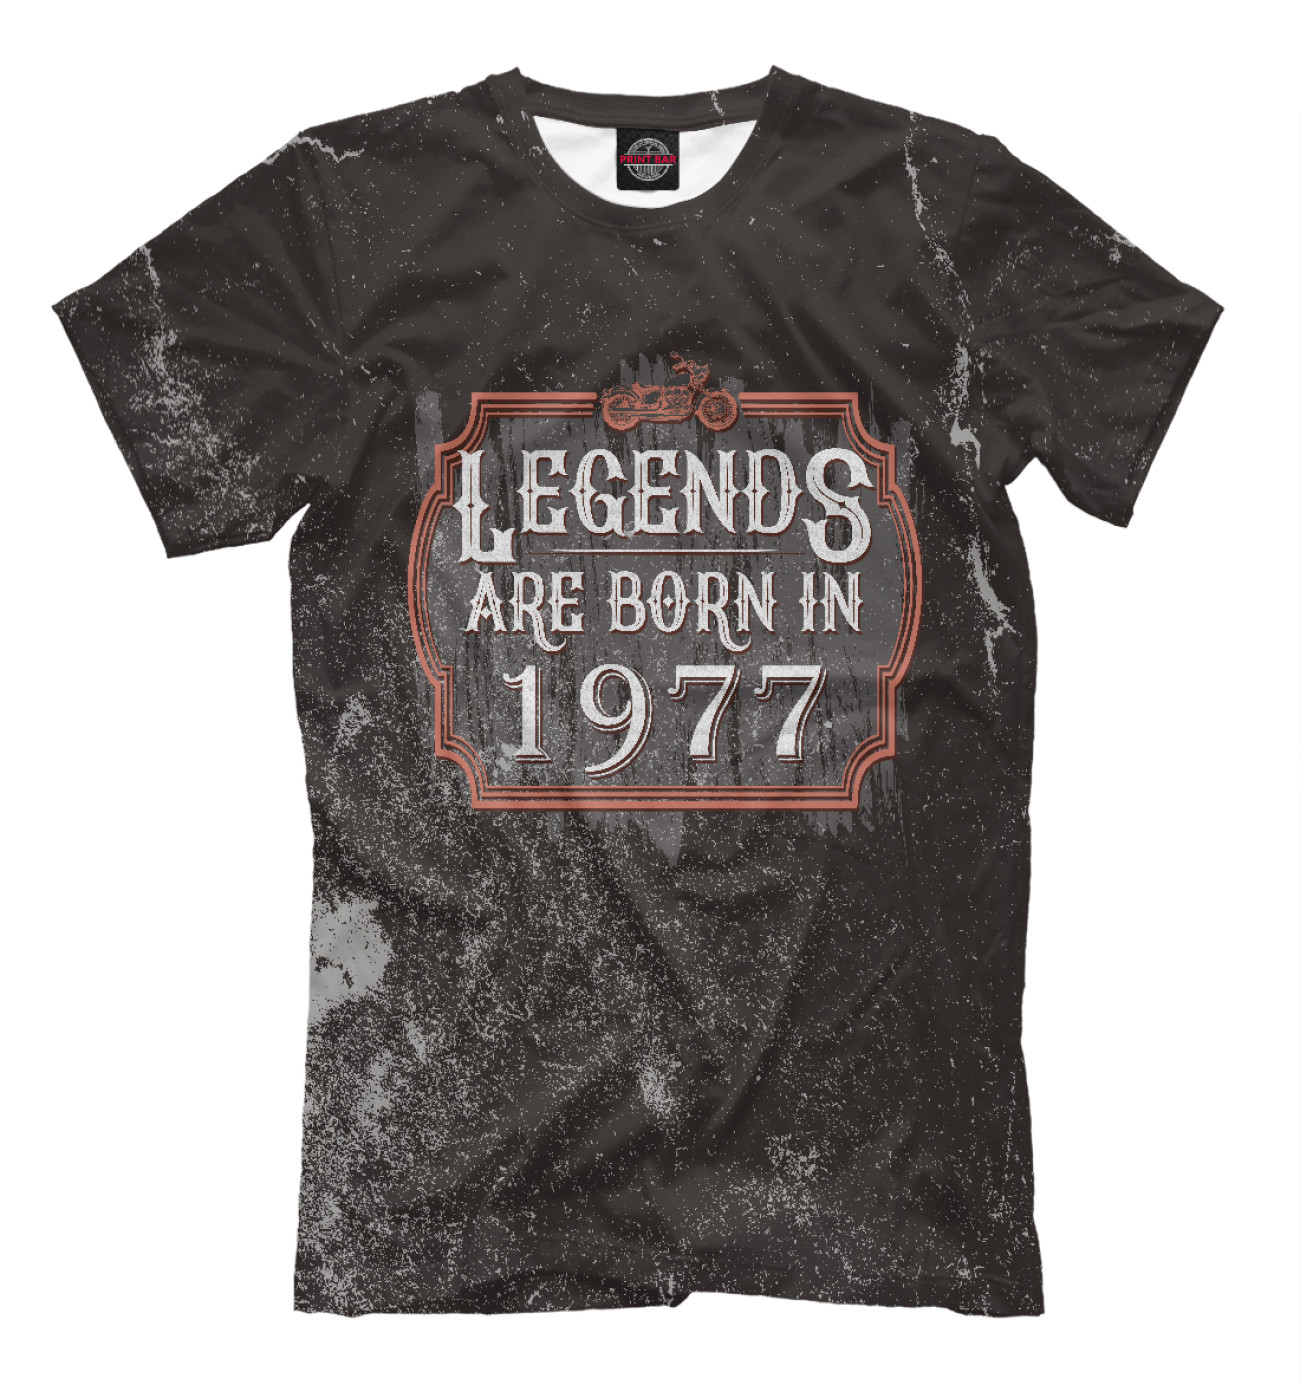 Мужская Футболка Legends Are Born In 1977, артикул: DSE-954472-fut-2